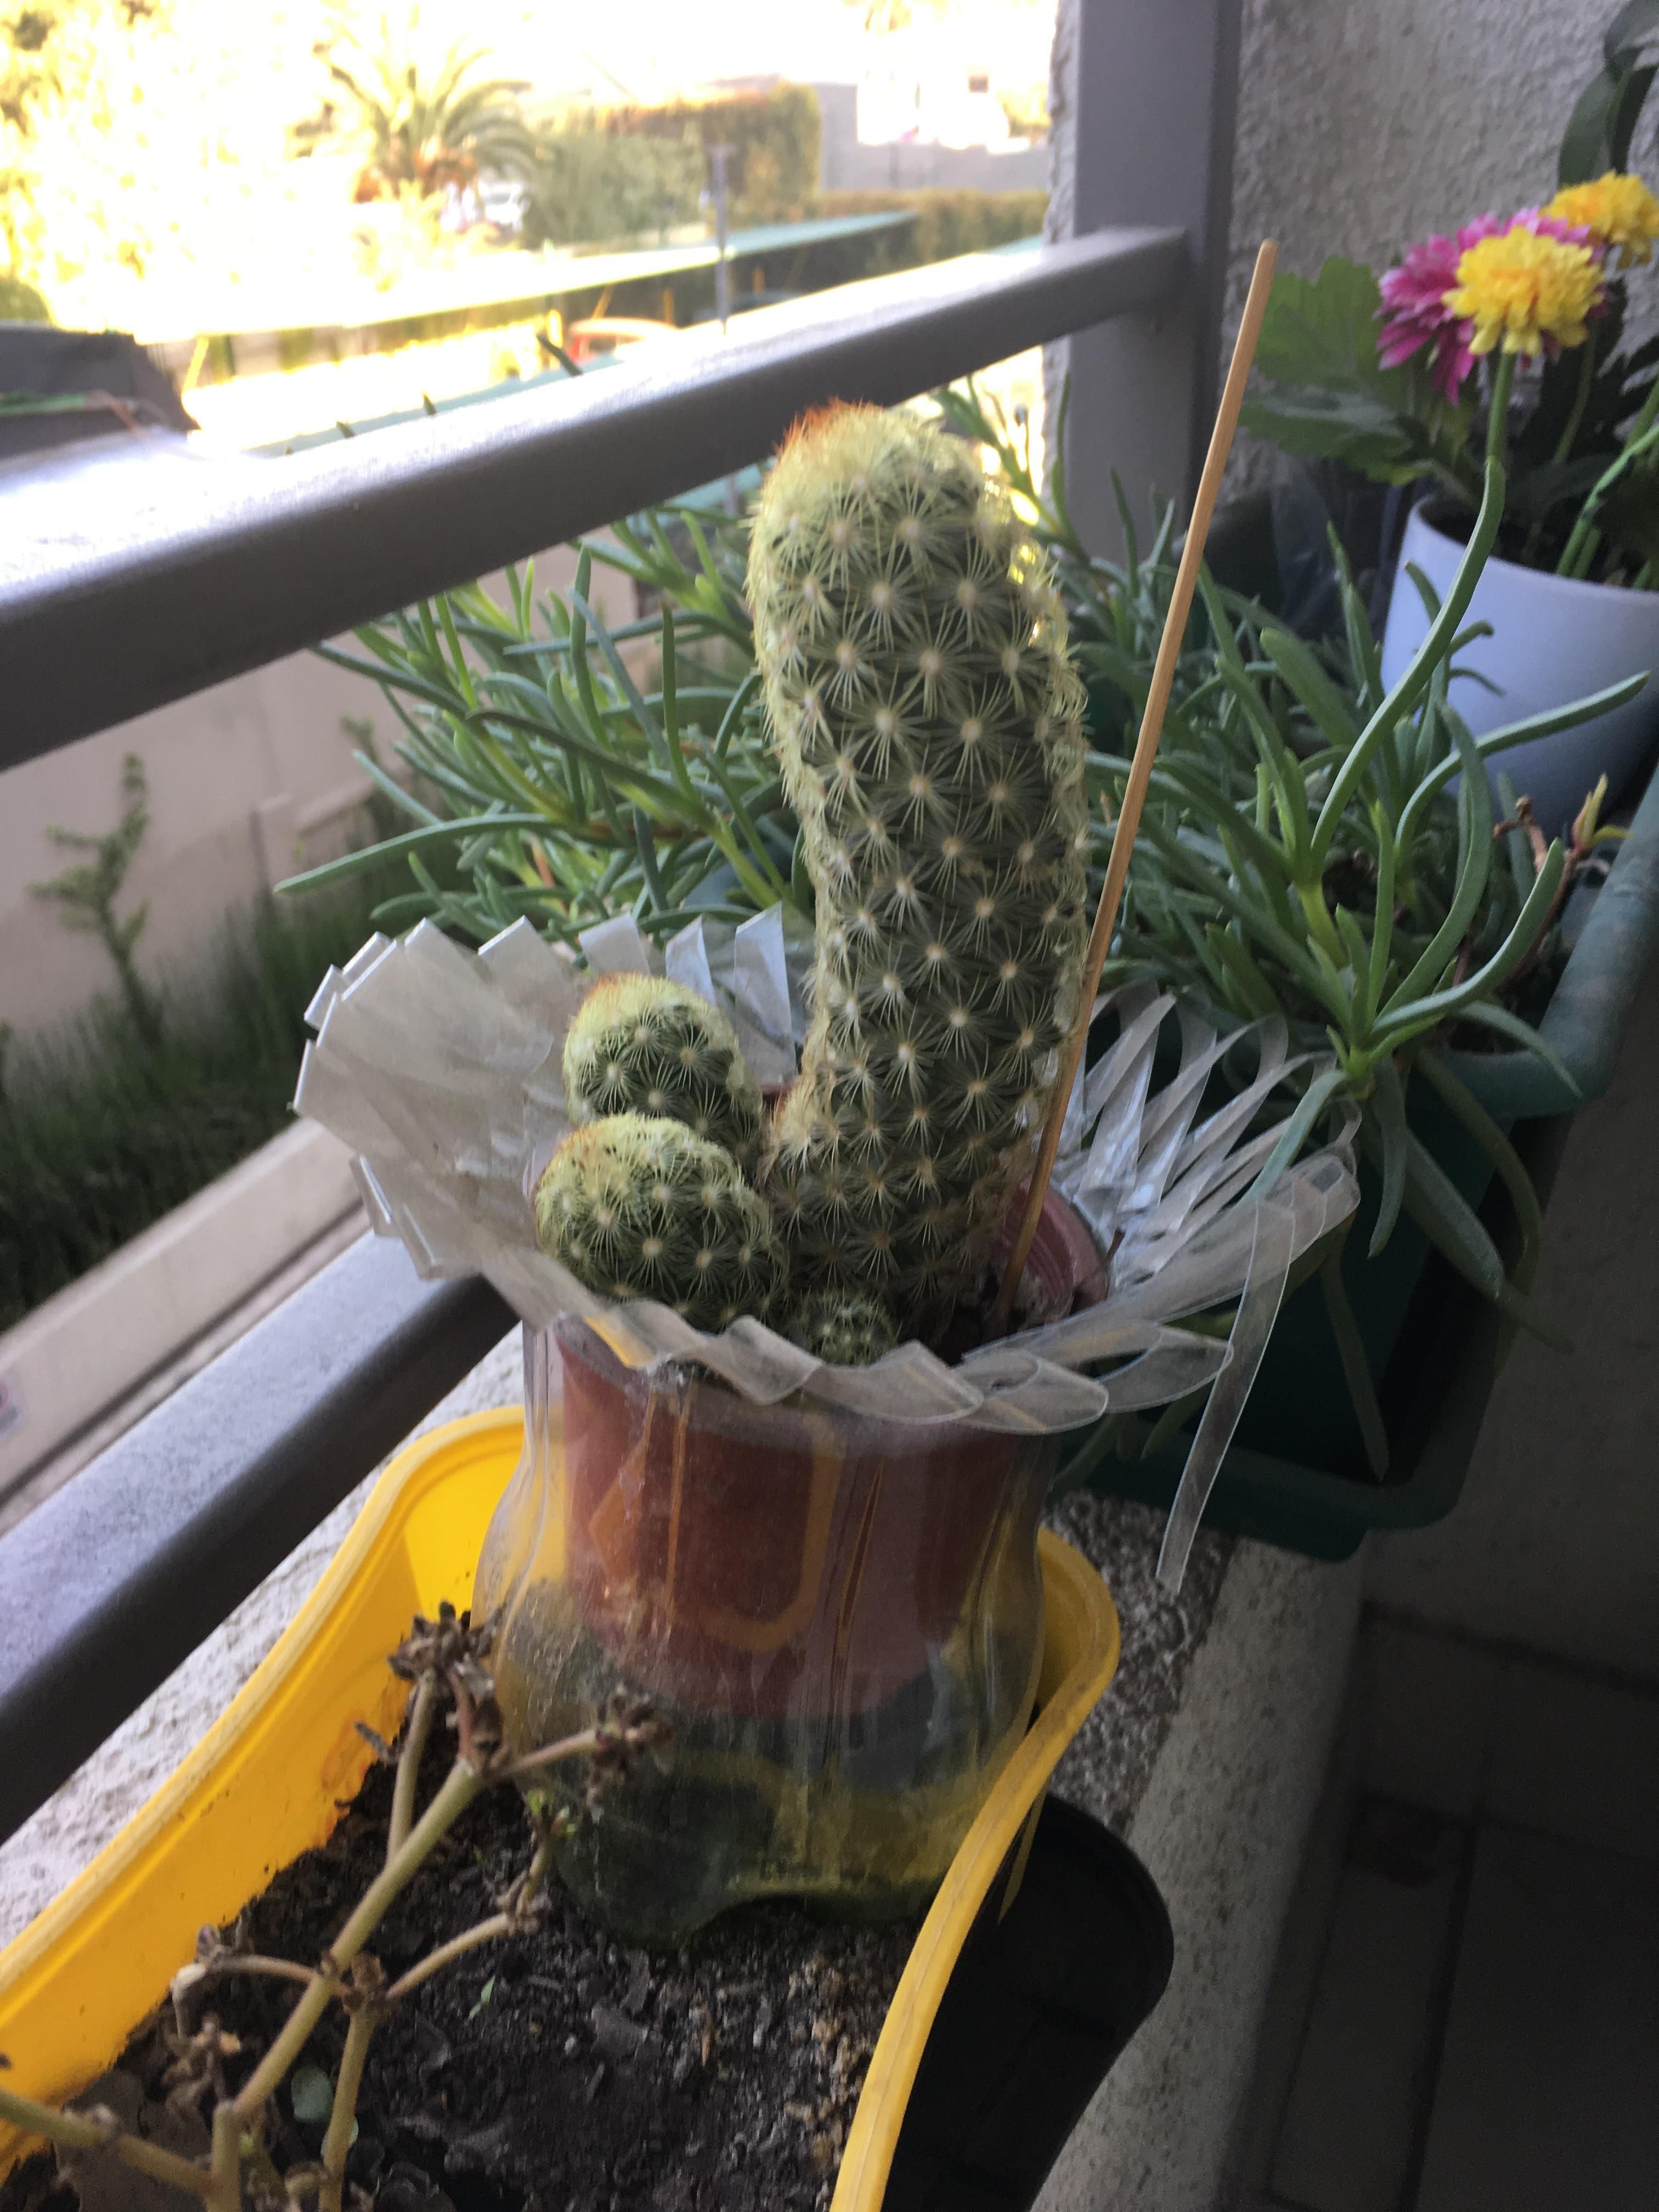 Cute cactus on my friend’s balcony